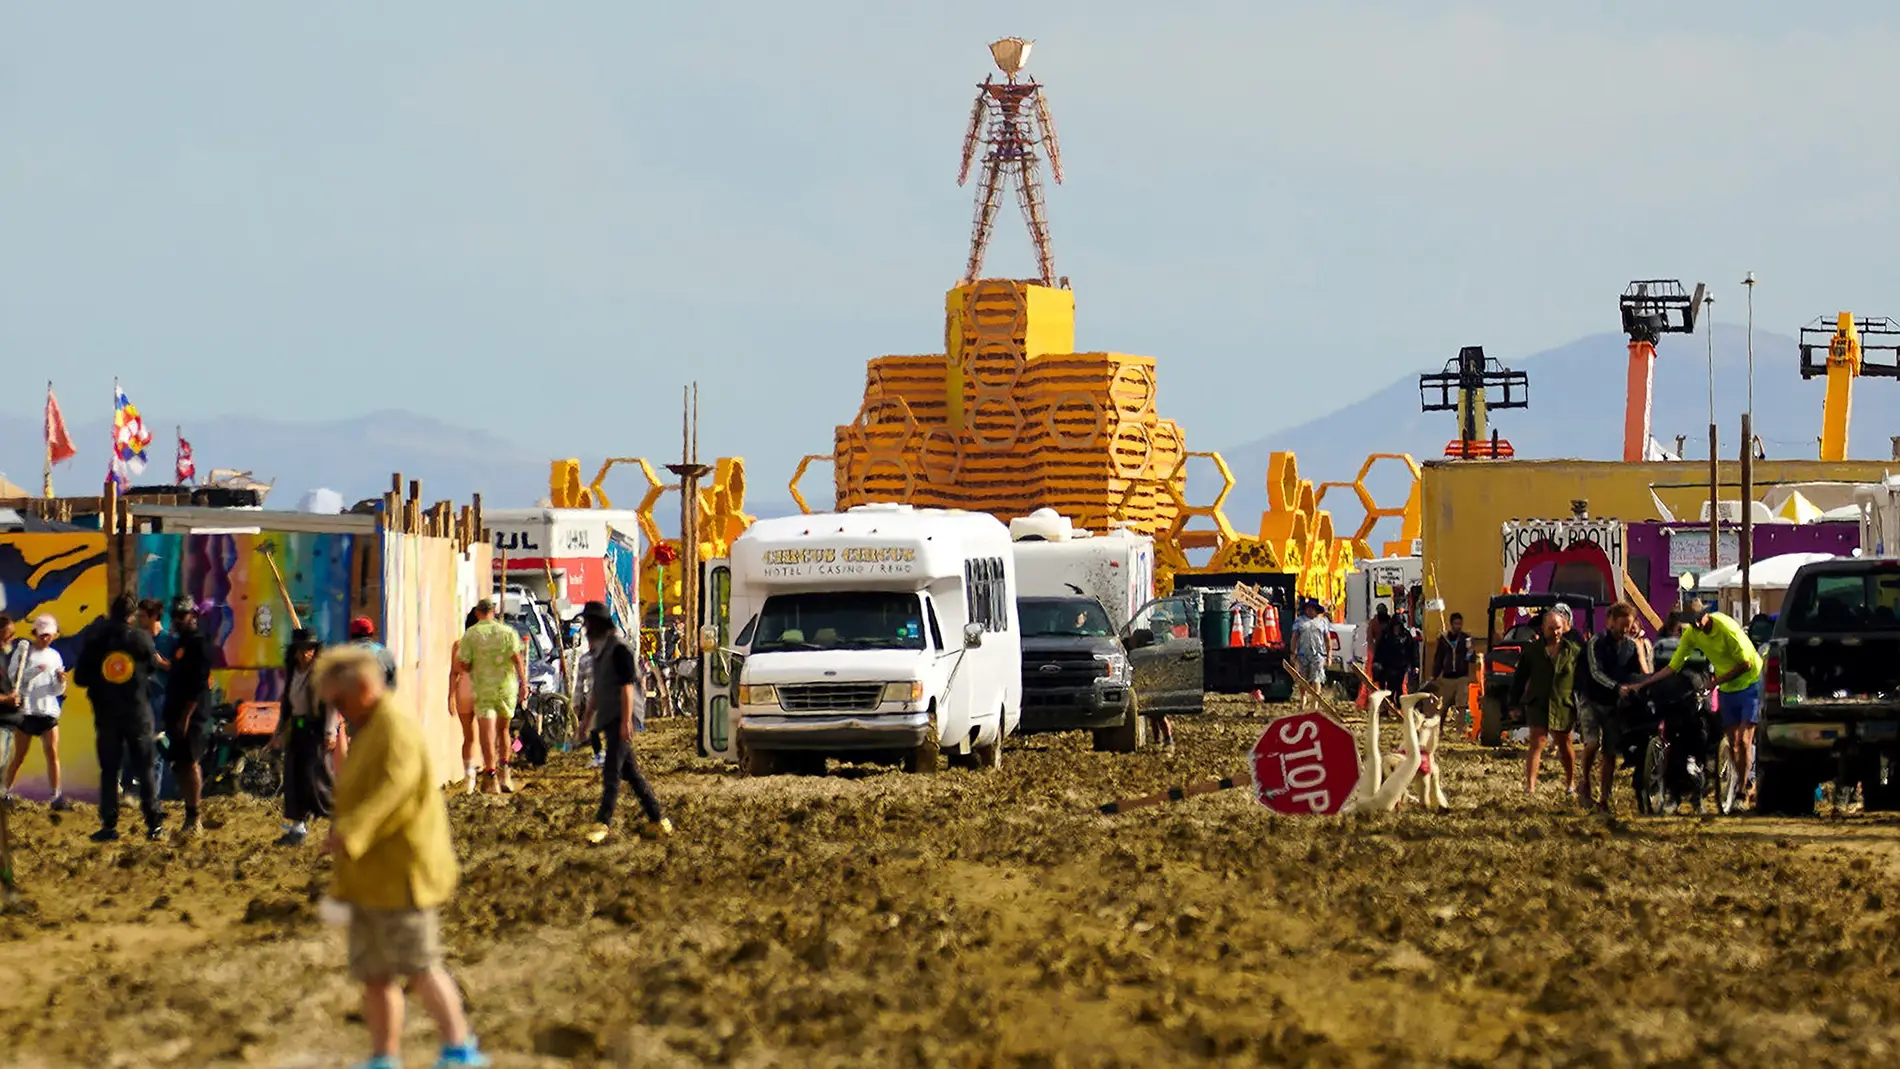 La estatua del Burning Man en medio del barrizal